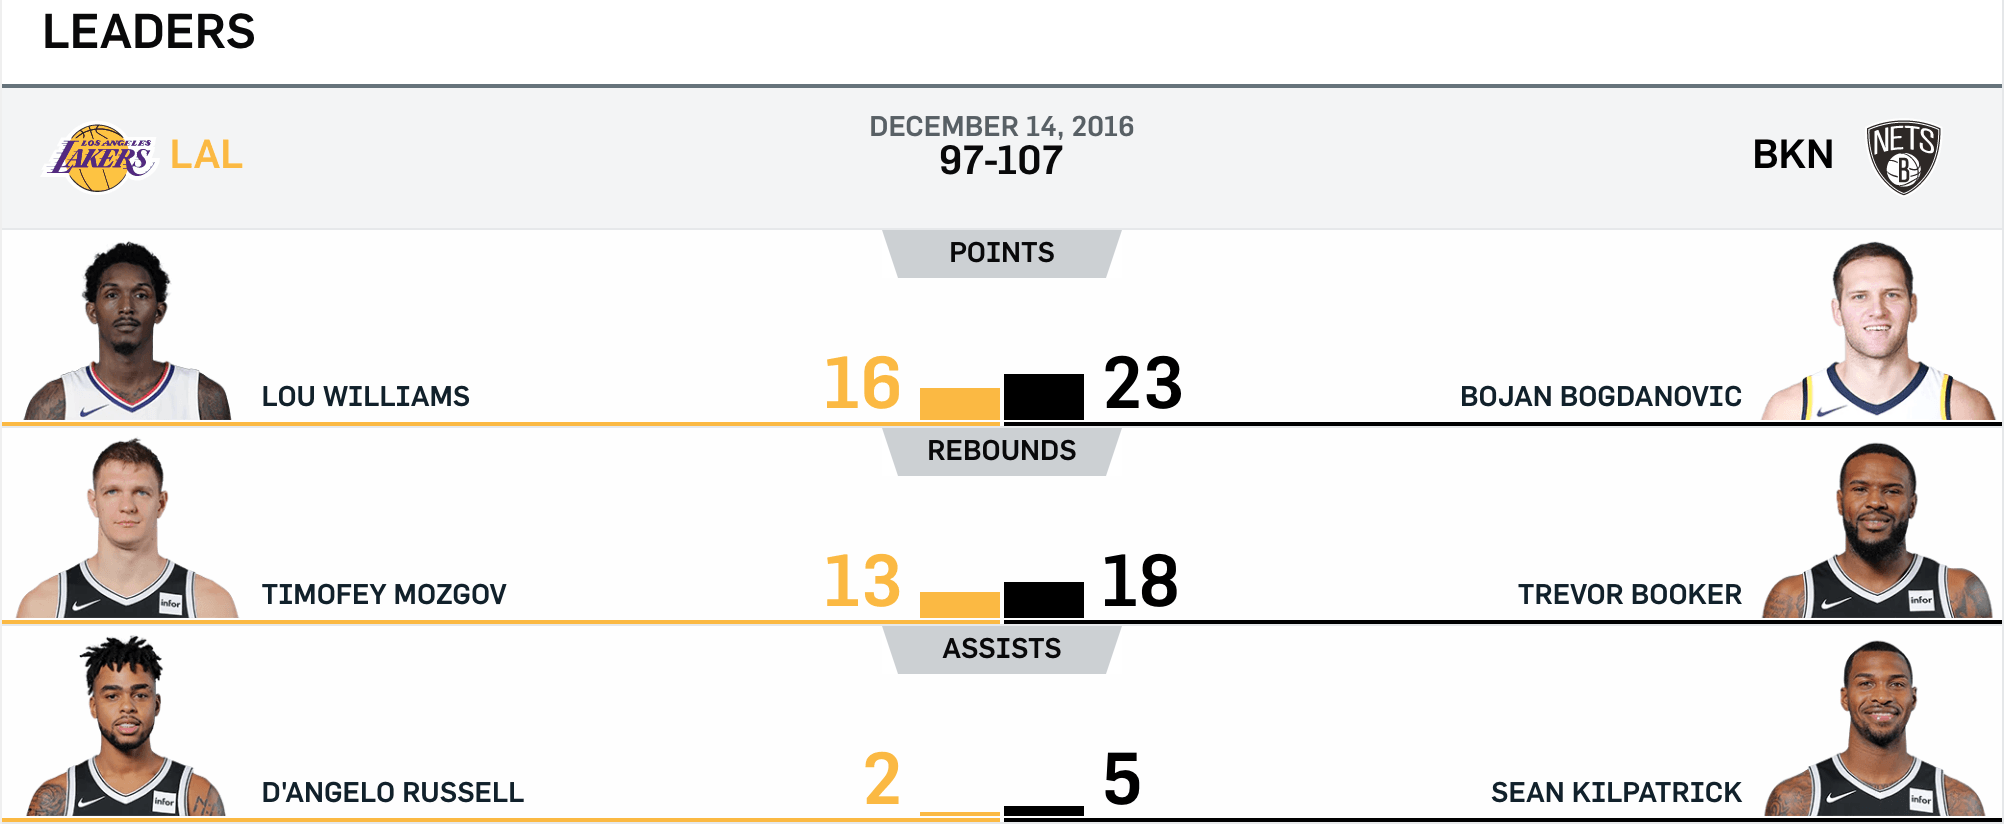 Nets vs Lakers 12/14/16 Leaders